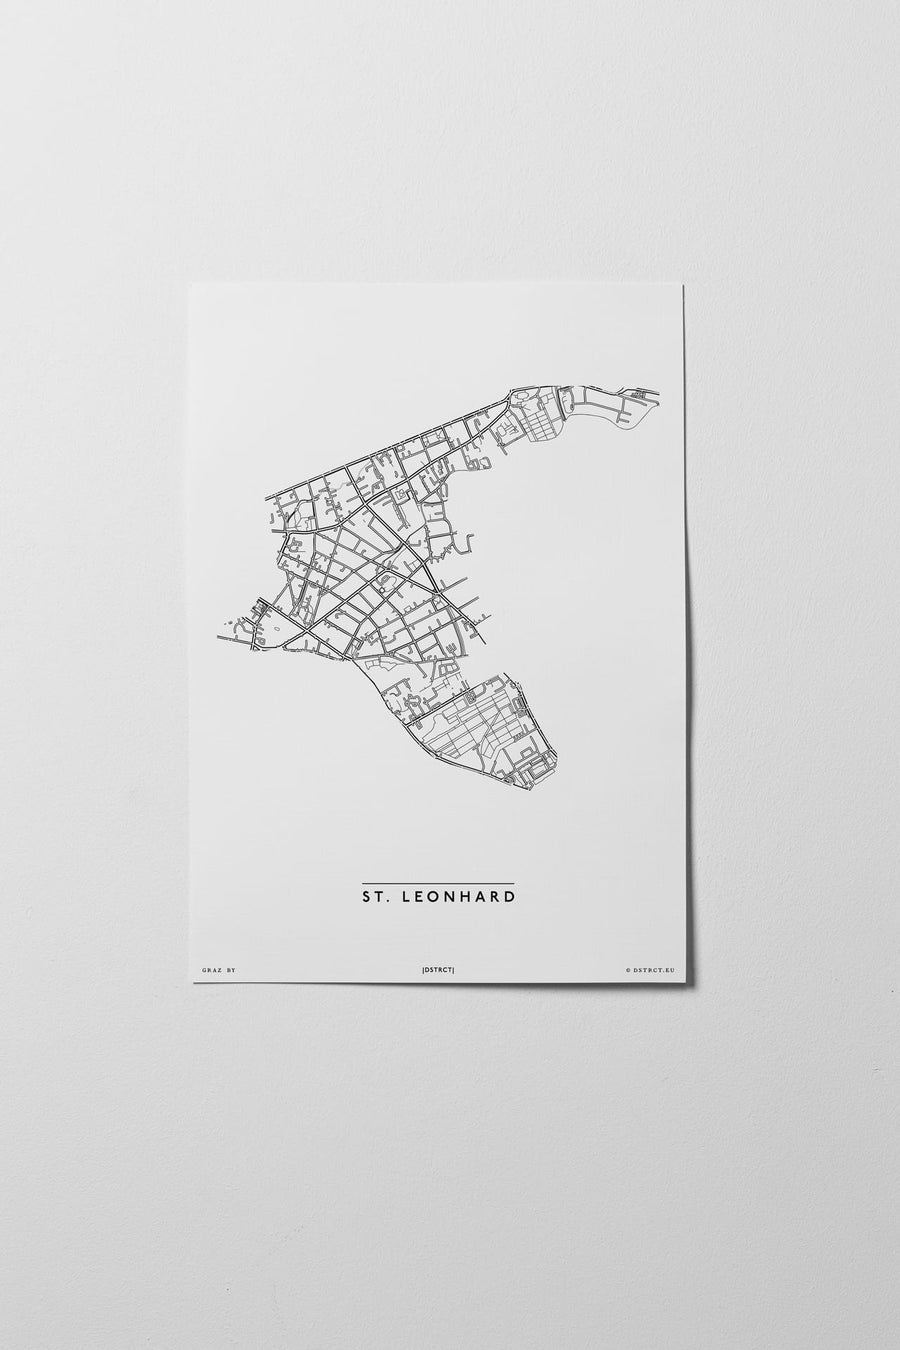 St. Leonhard | 8010, 8047 | Graz | City Map Karte Plan Bild Print Poster Unframed Ohne Rahmen